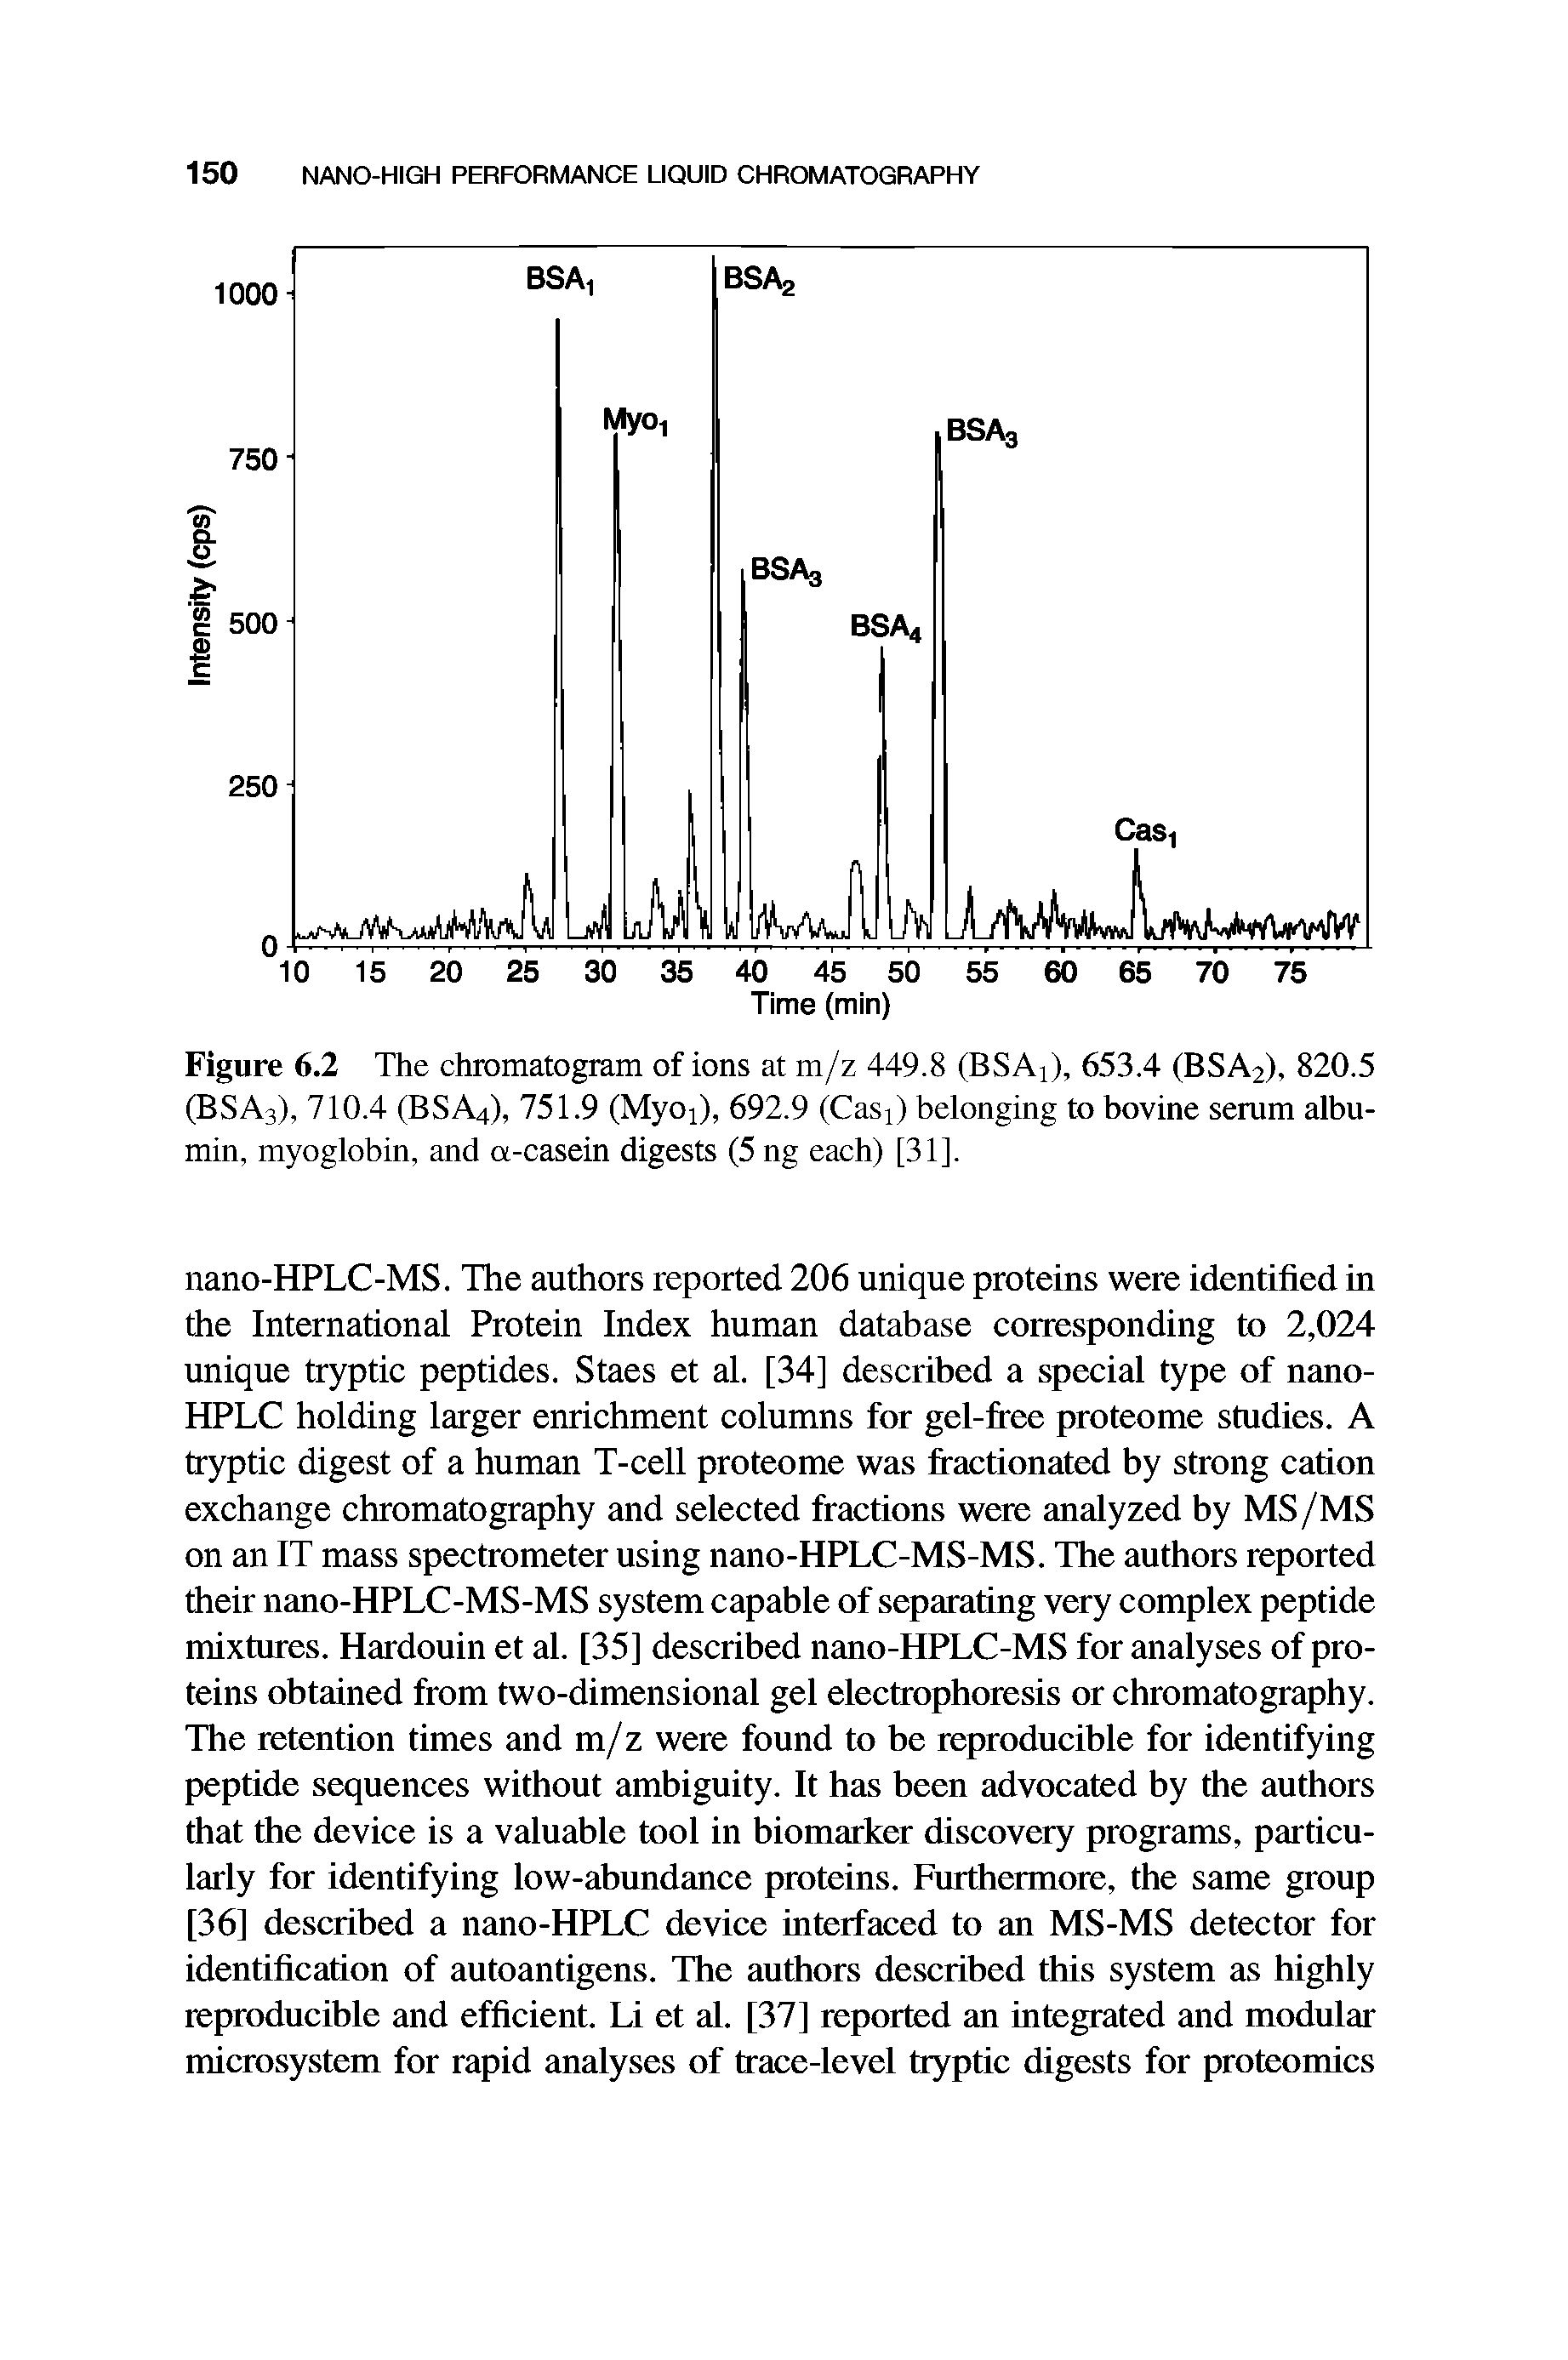 Figure 6.2 The chromatogram of ions at m/z 449.8 (BSA j), 653.4 (BSA2), 820.5 (BSA3), 710.4 (BSA4), 751.9 (Myoi), 692.9 (Casj) belonging to bovine serum albumin, myoglobin, and a-casein digests (5 ng each) [31].